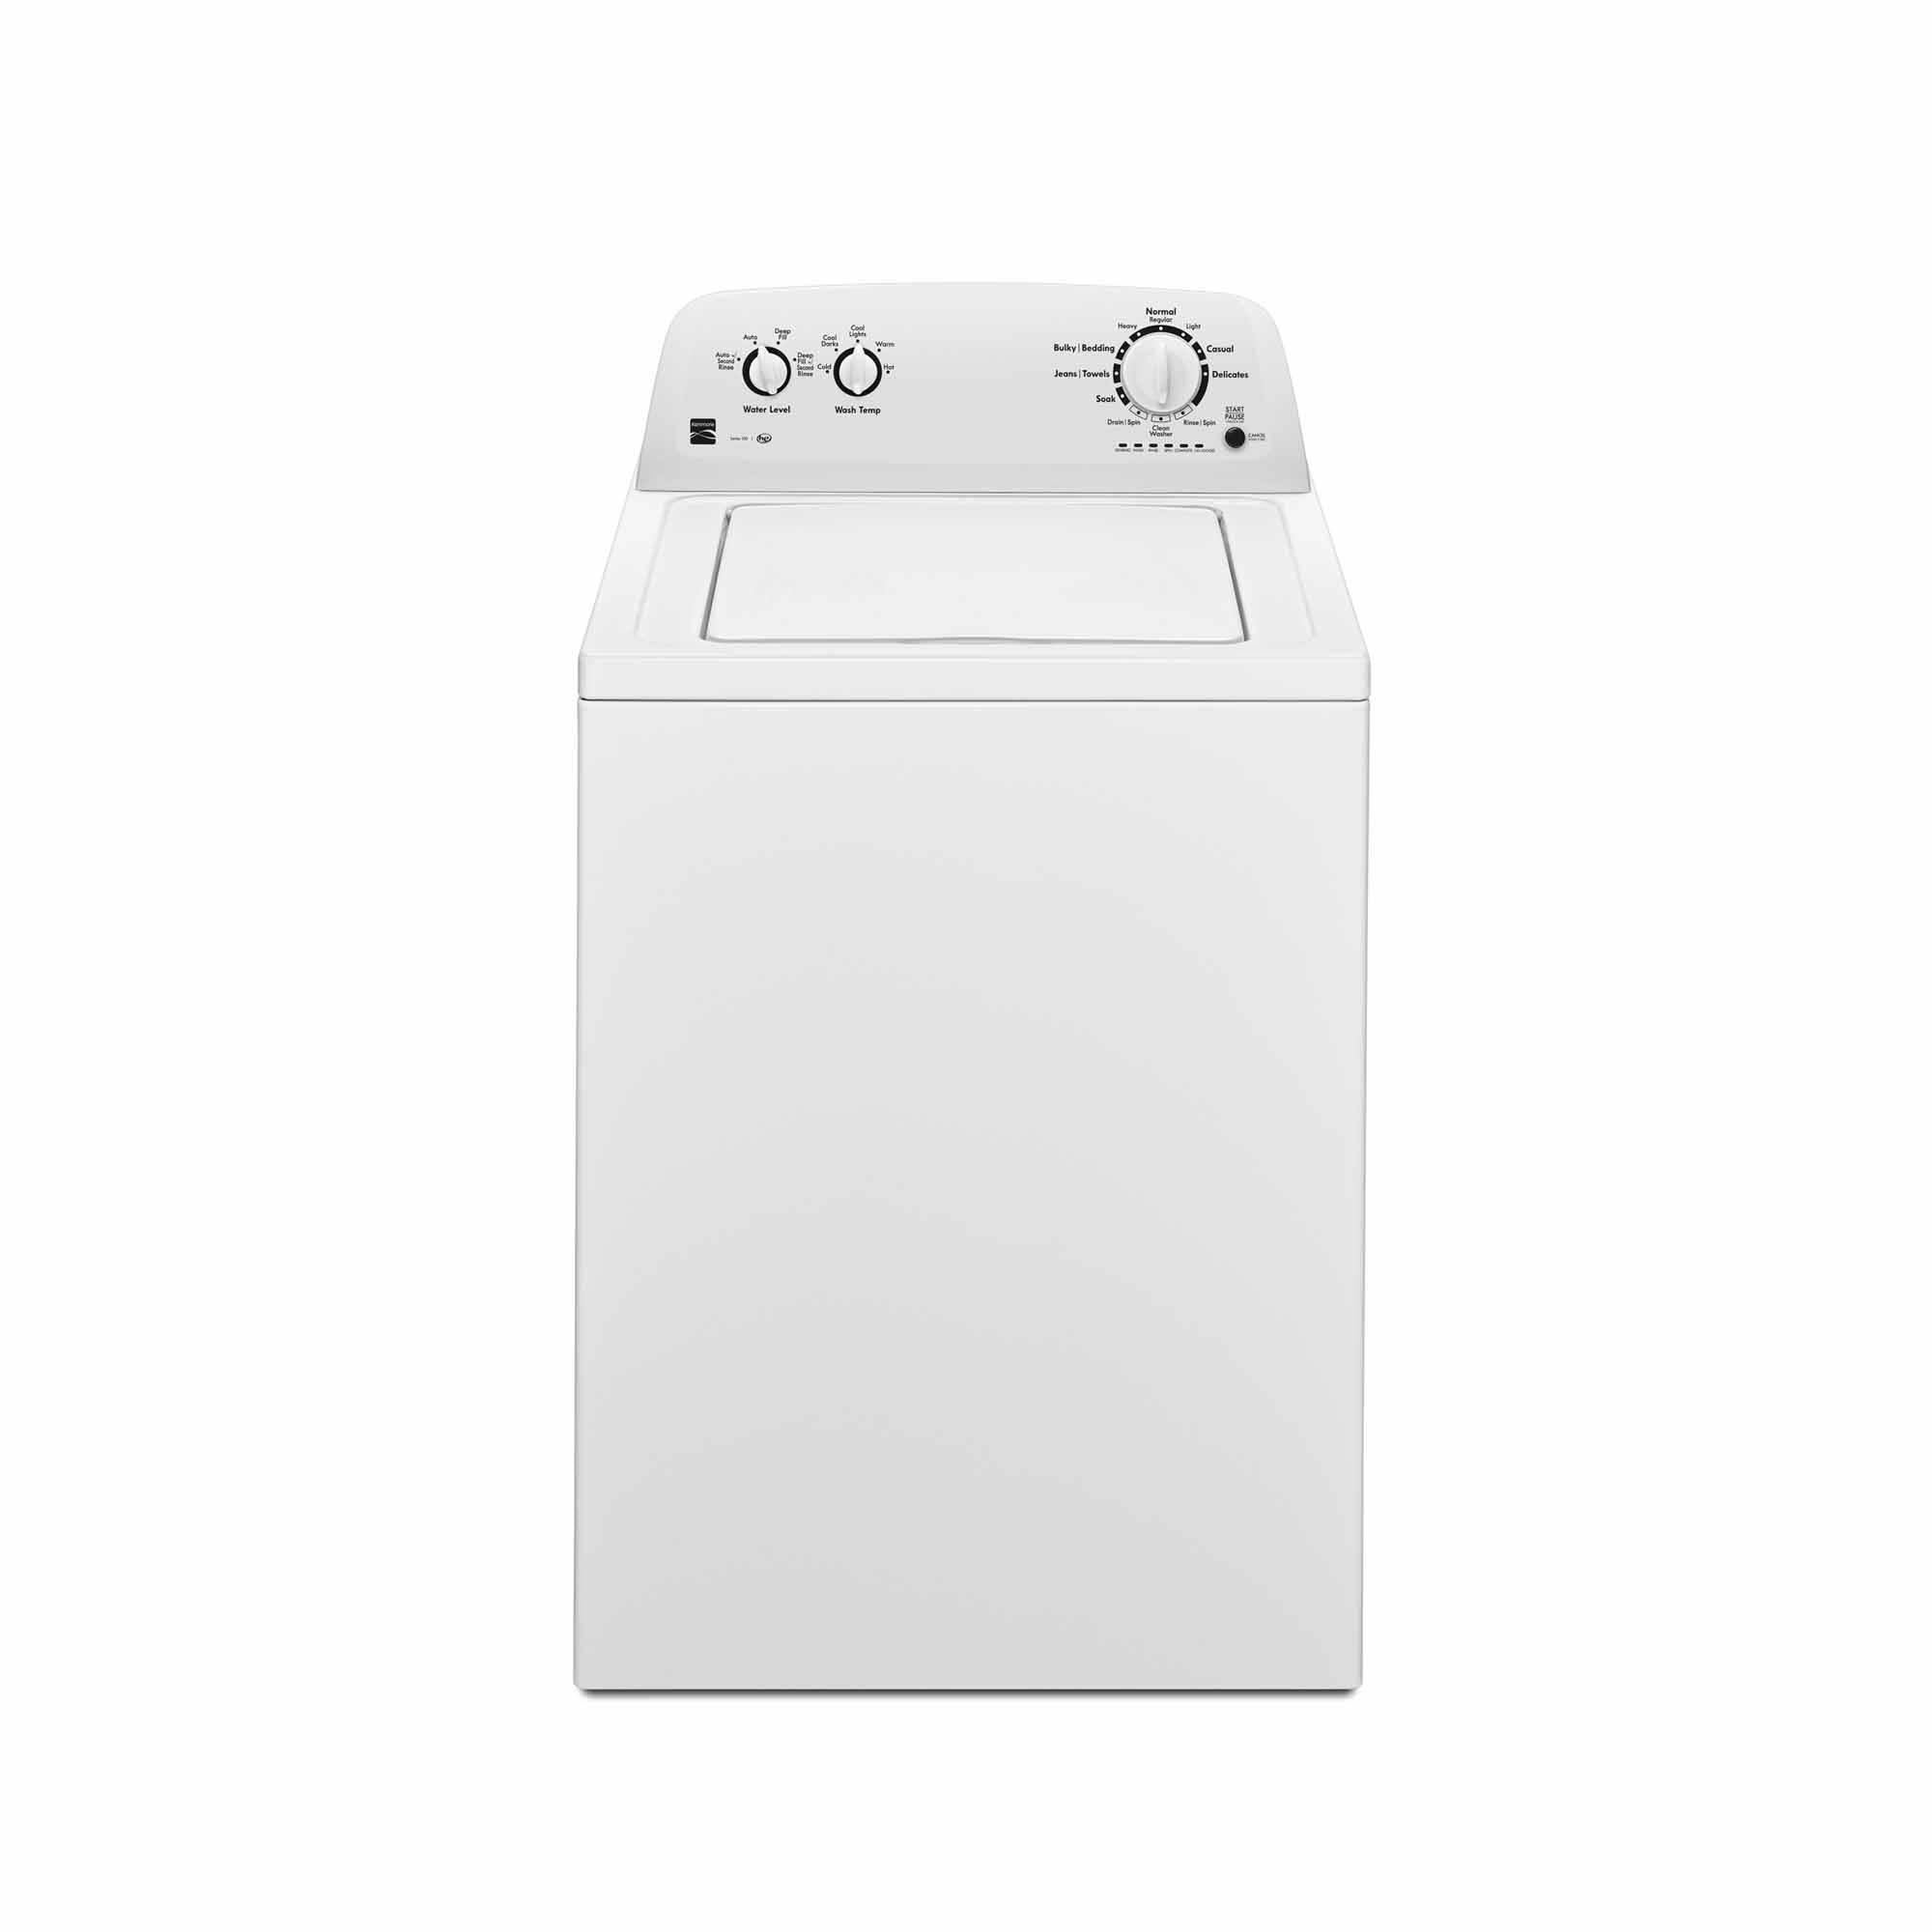 Mini lavadora plegable, mini lavadora de 6 L, lavadora portátil de cubo con  tapa negra, deshidratador integrado, para ropa de bebé, ropa interior o